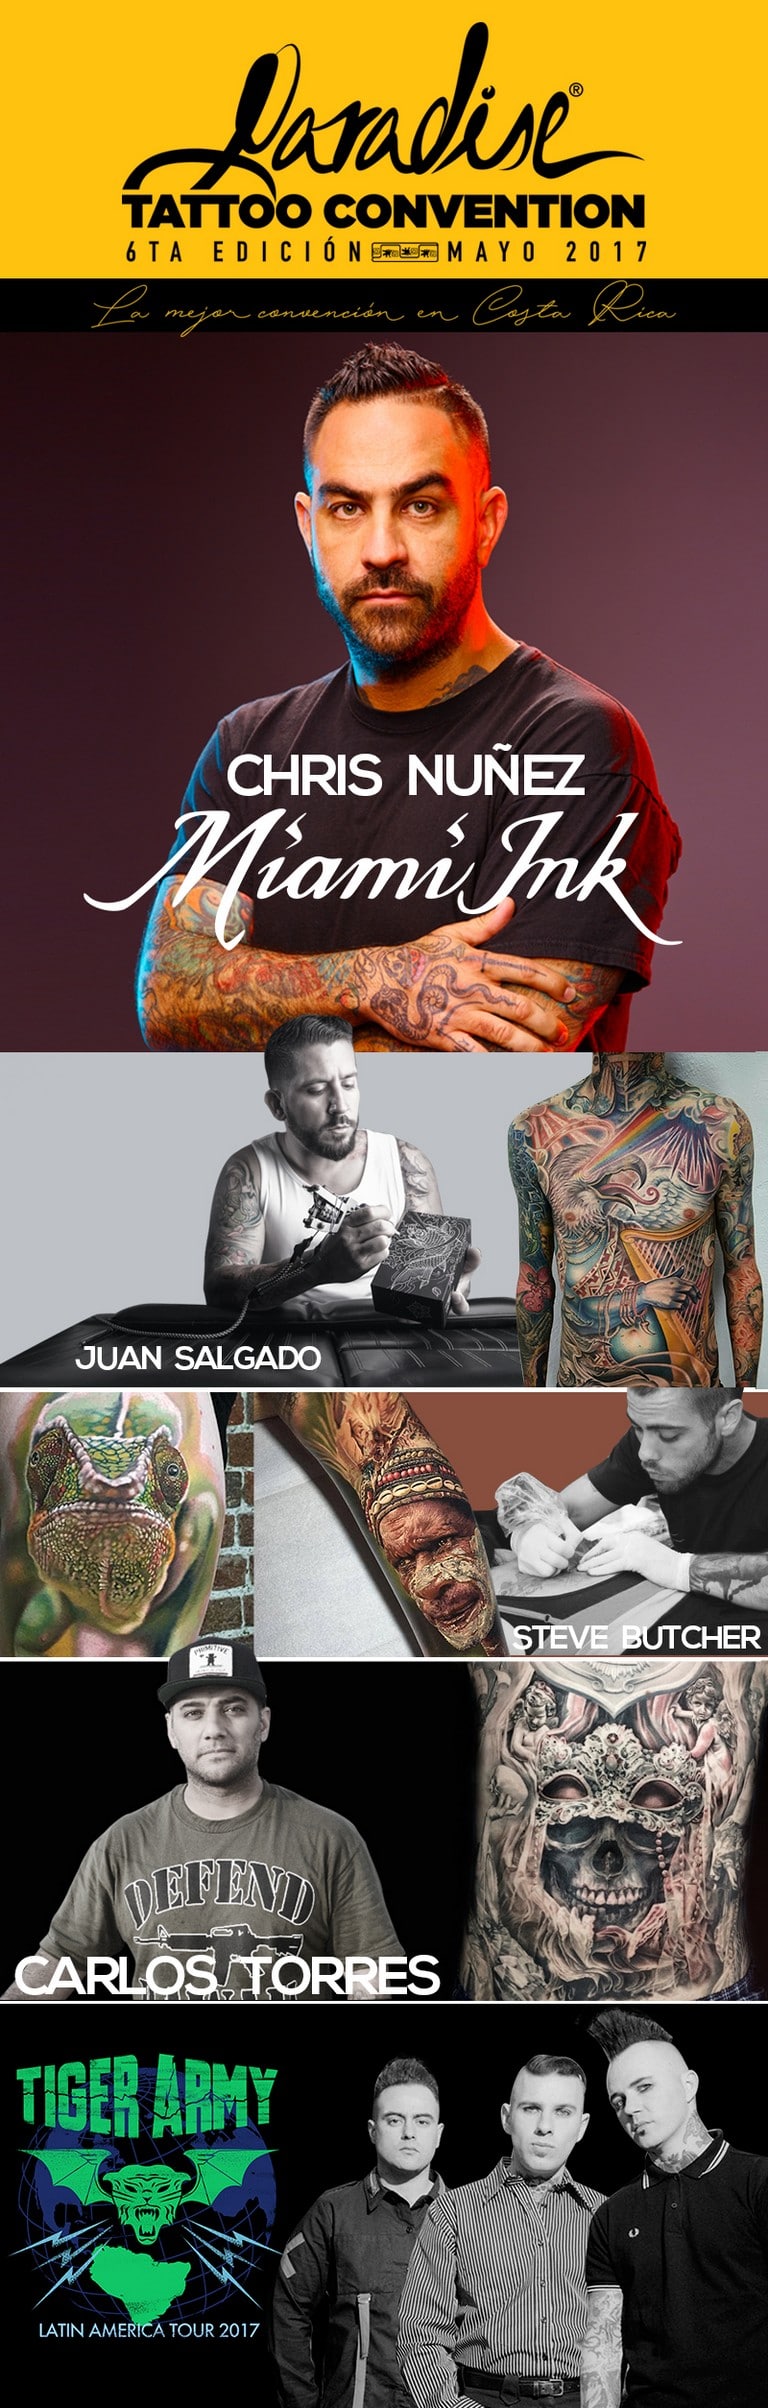 Paradise Tattoo Convention 2017 Reune lo Mejor del Arte en Tatuajes